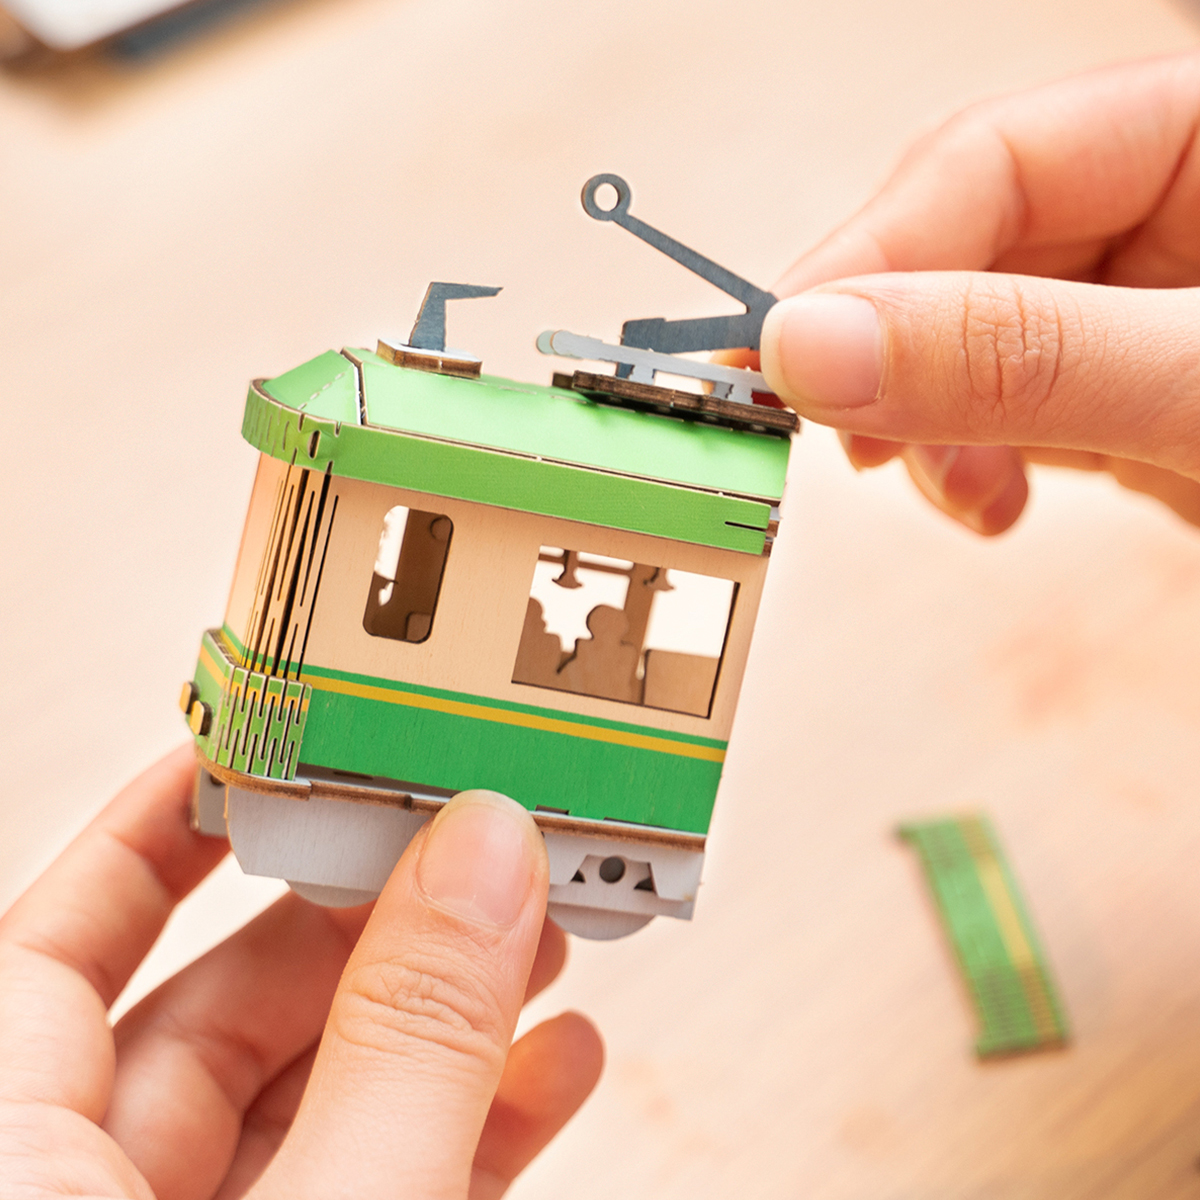 Rolife Sakura Densya 3D Wooden DIY Miniature House Book Nook TGB01 (Ba –  Sparetime